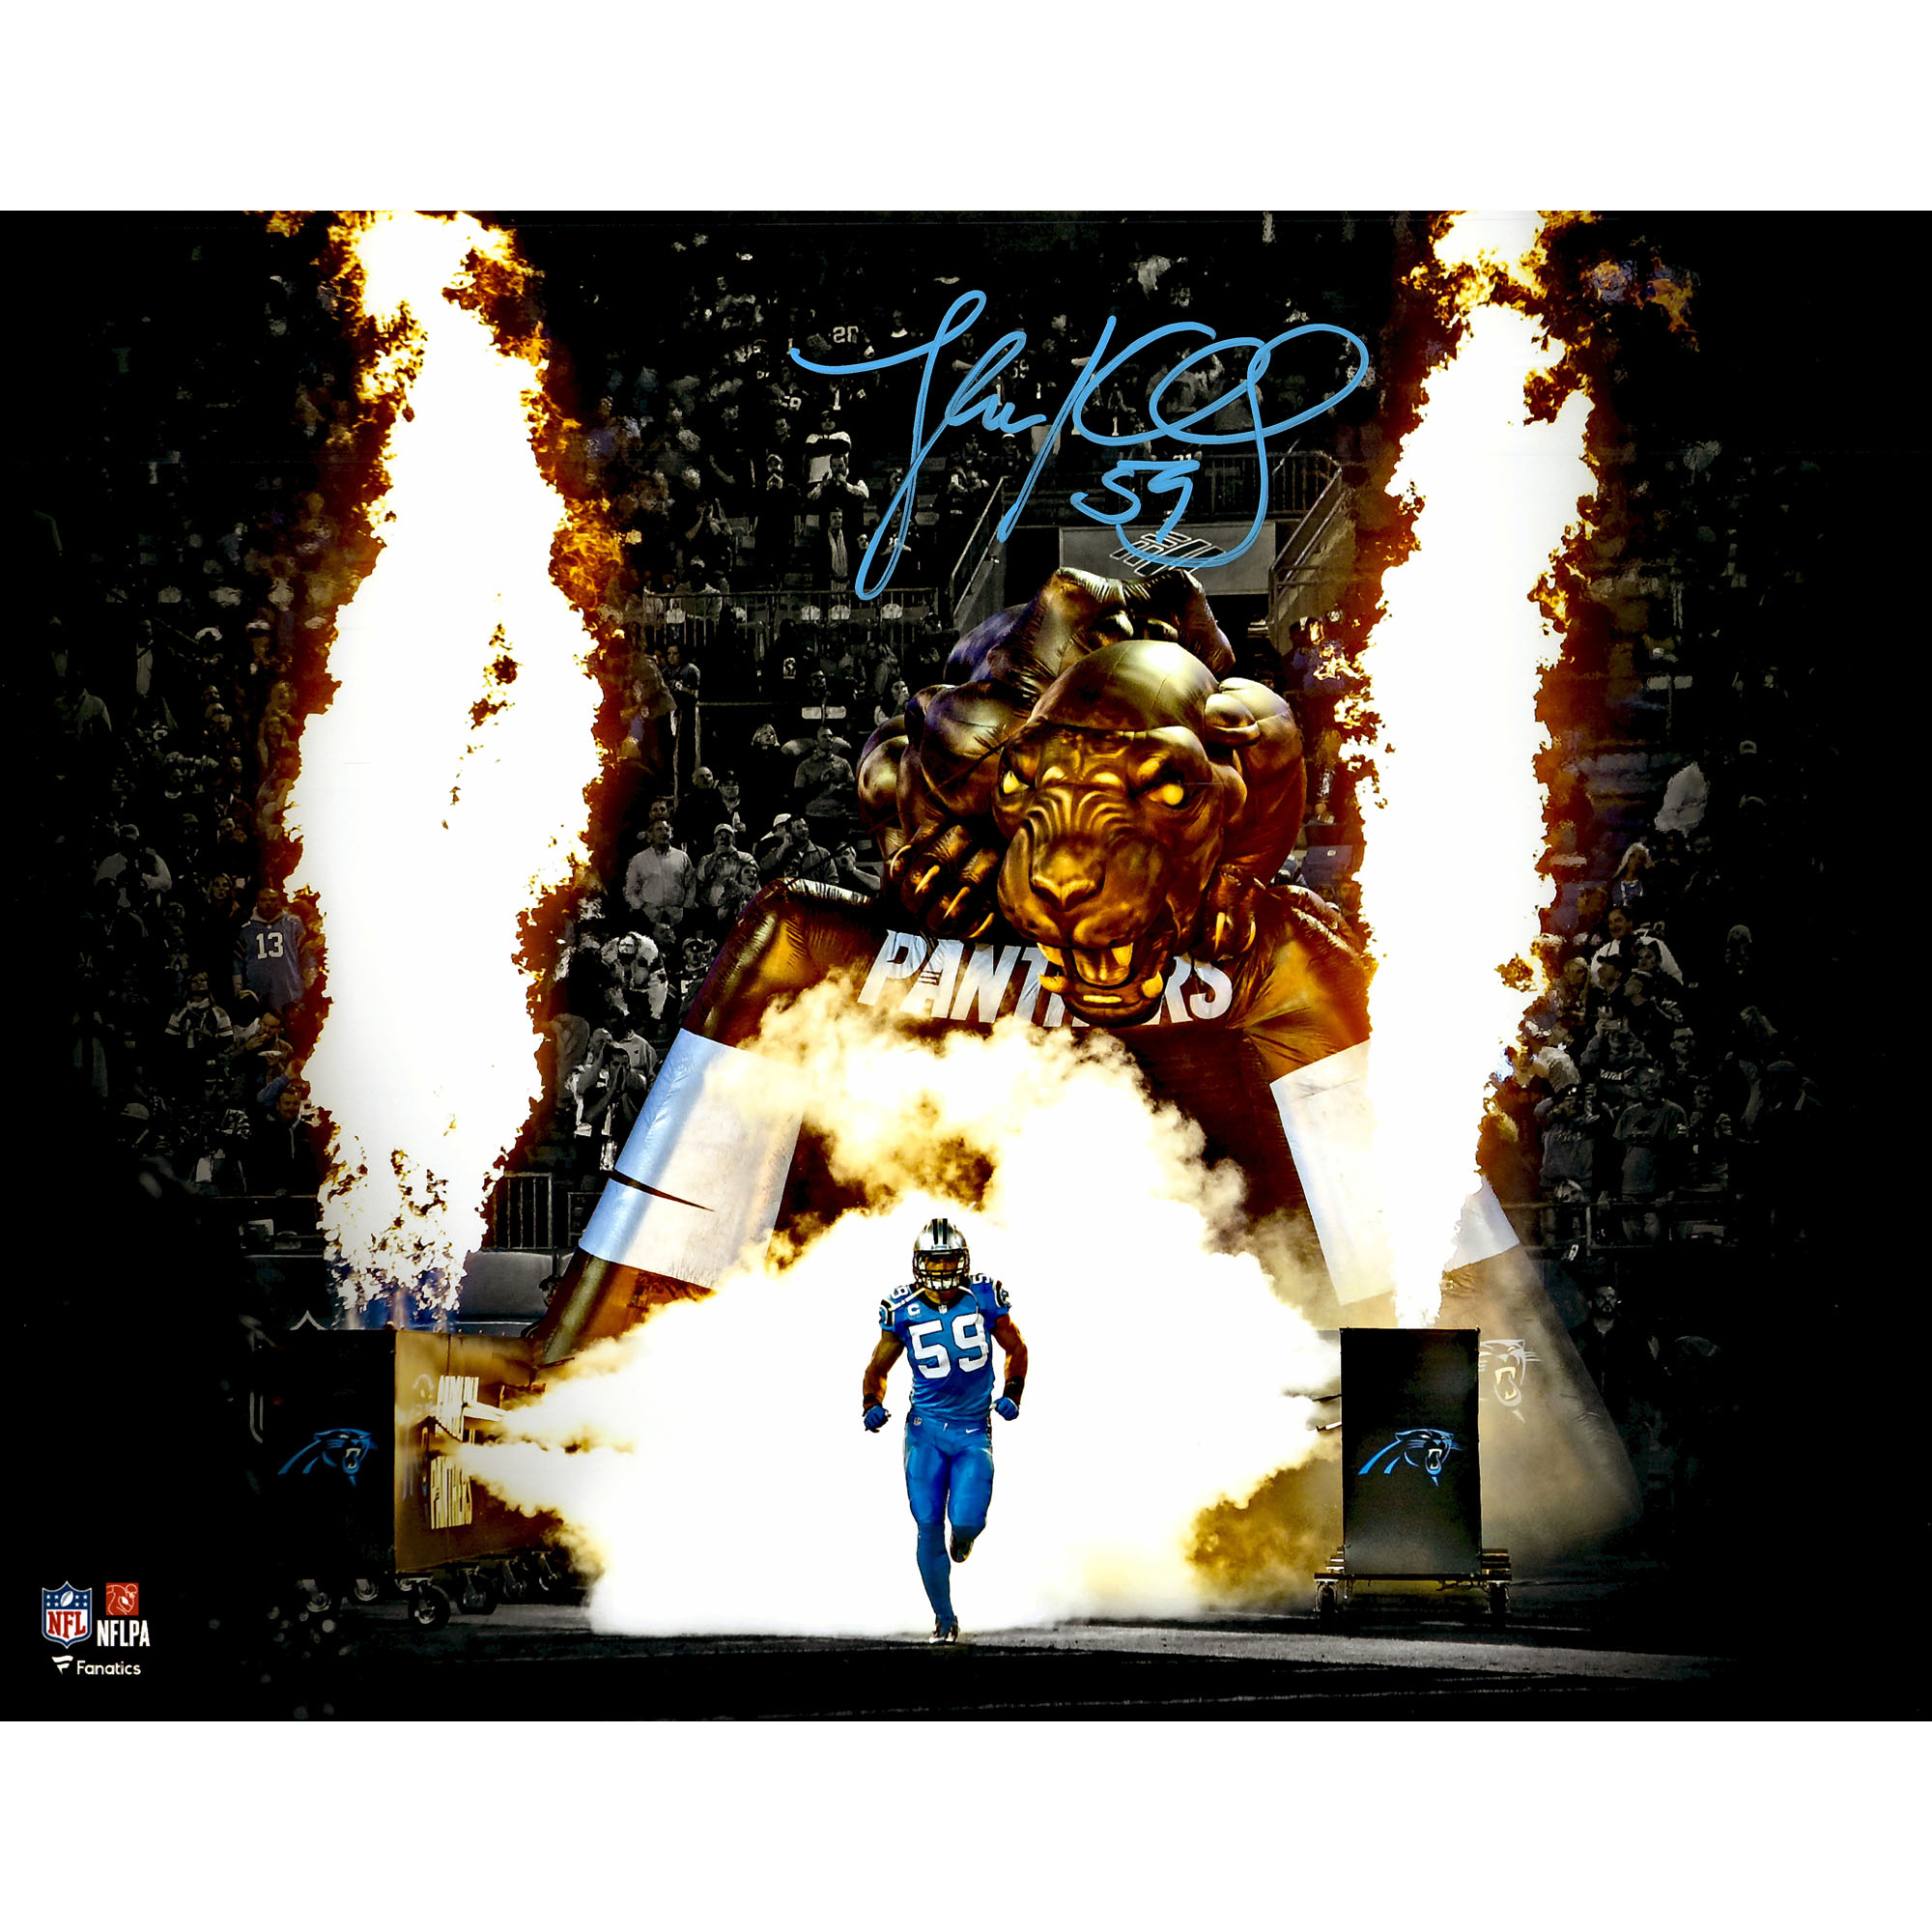 Autogrammfoto von Luke Kuechly, Carolina Panthers, 11 x 35,6 cm, Feuereingang